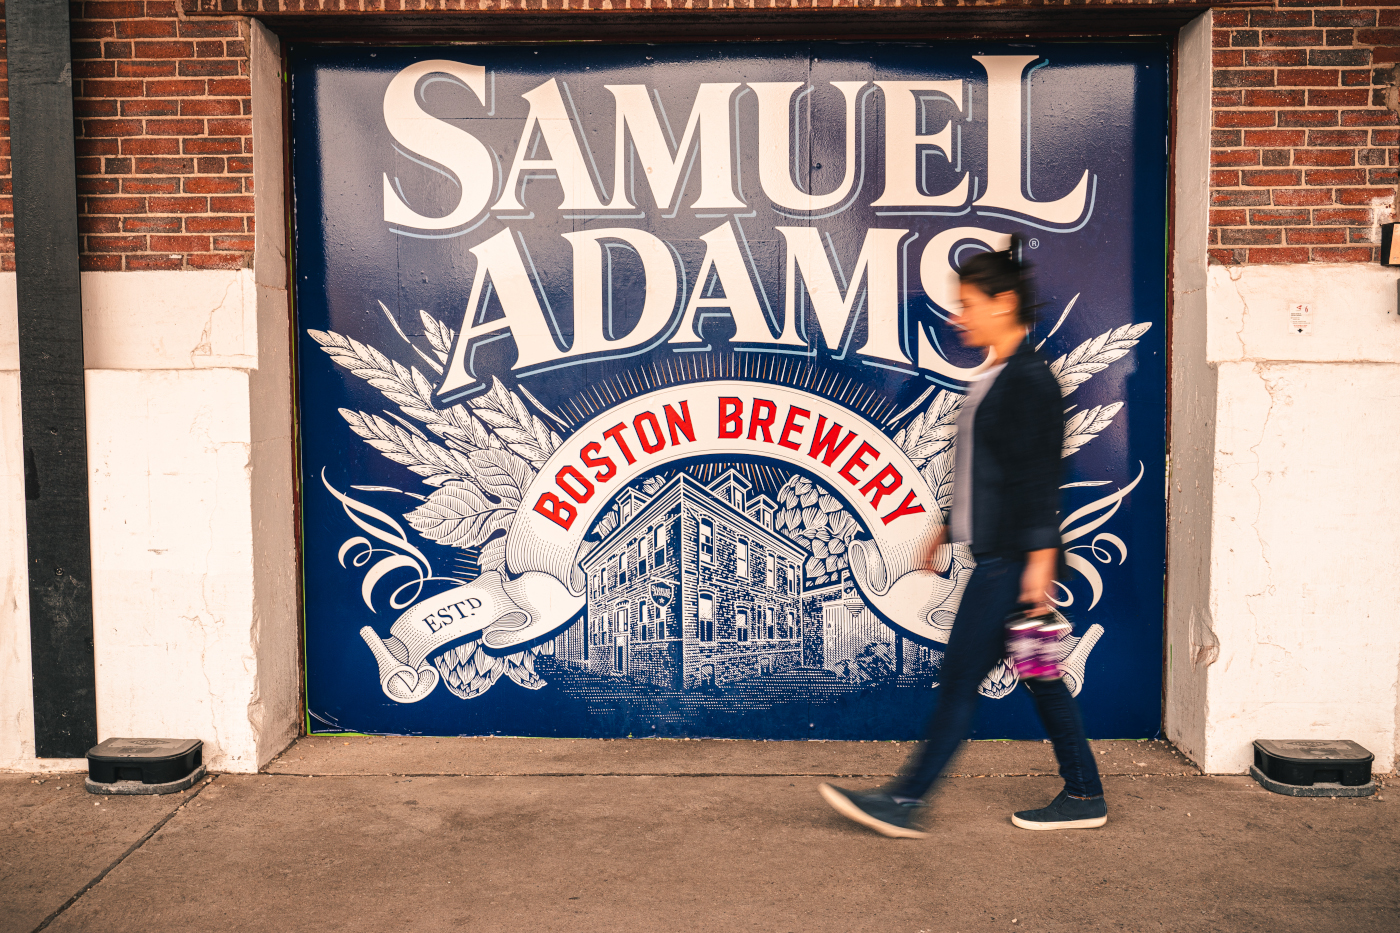 Samuel Adams Boston Brewery - mural outside